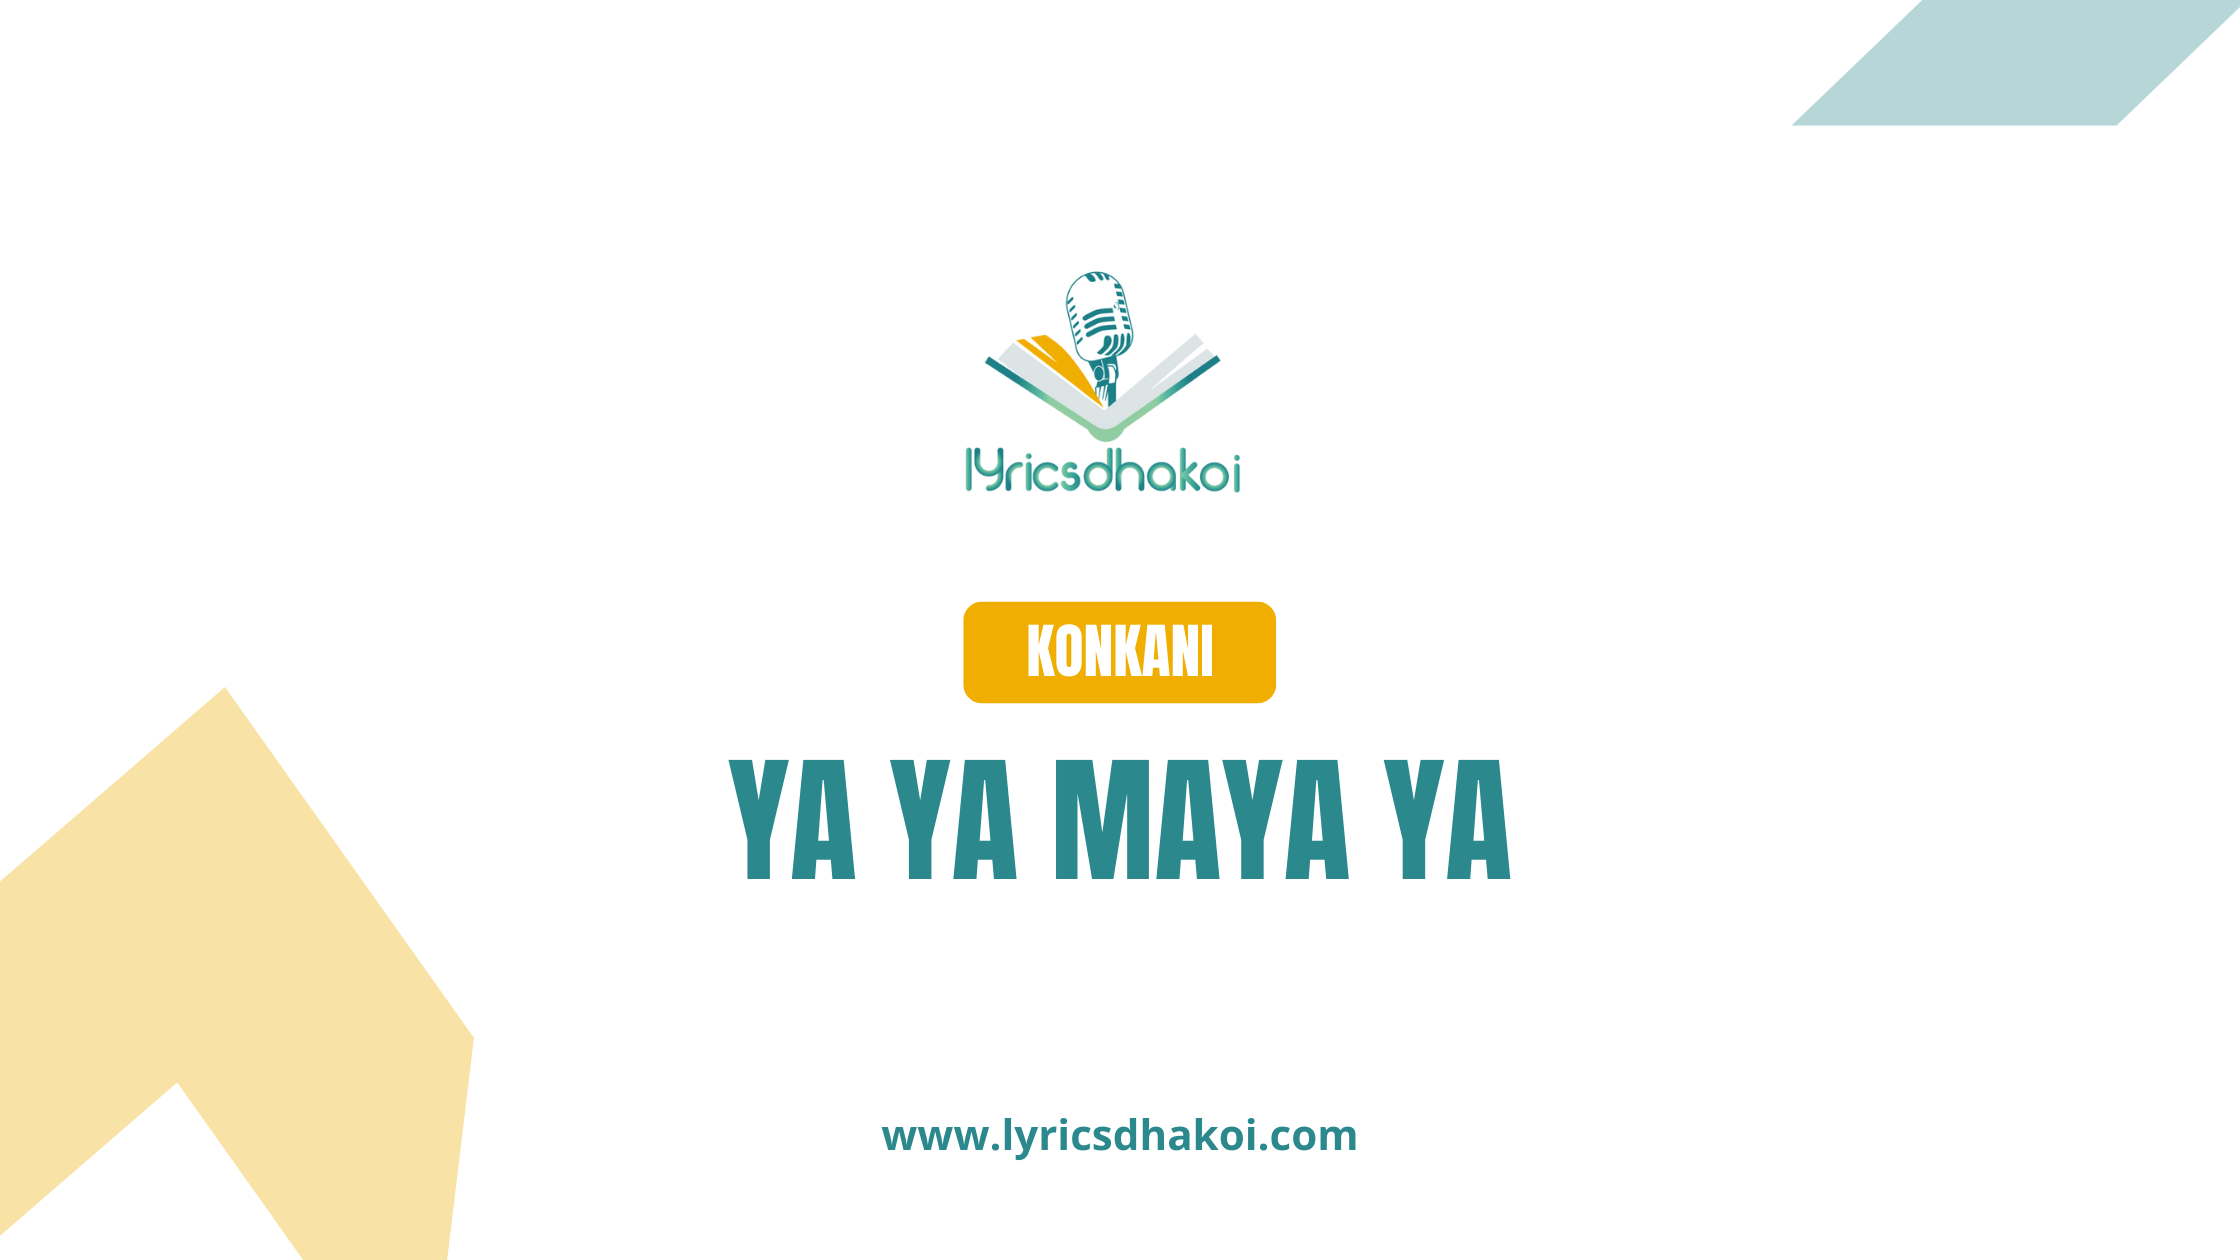 Ya Ya Maya Ya Konkani Lyrics for Karaoke Online - LyricsDhakoi.com